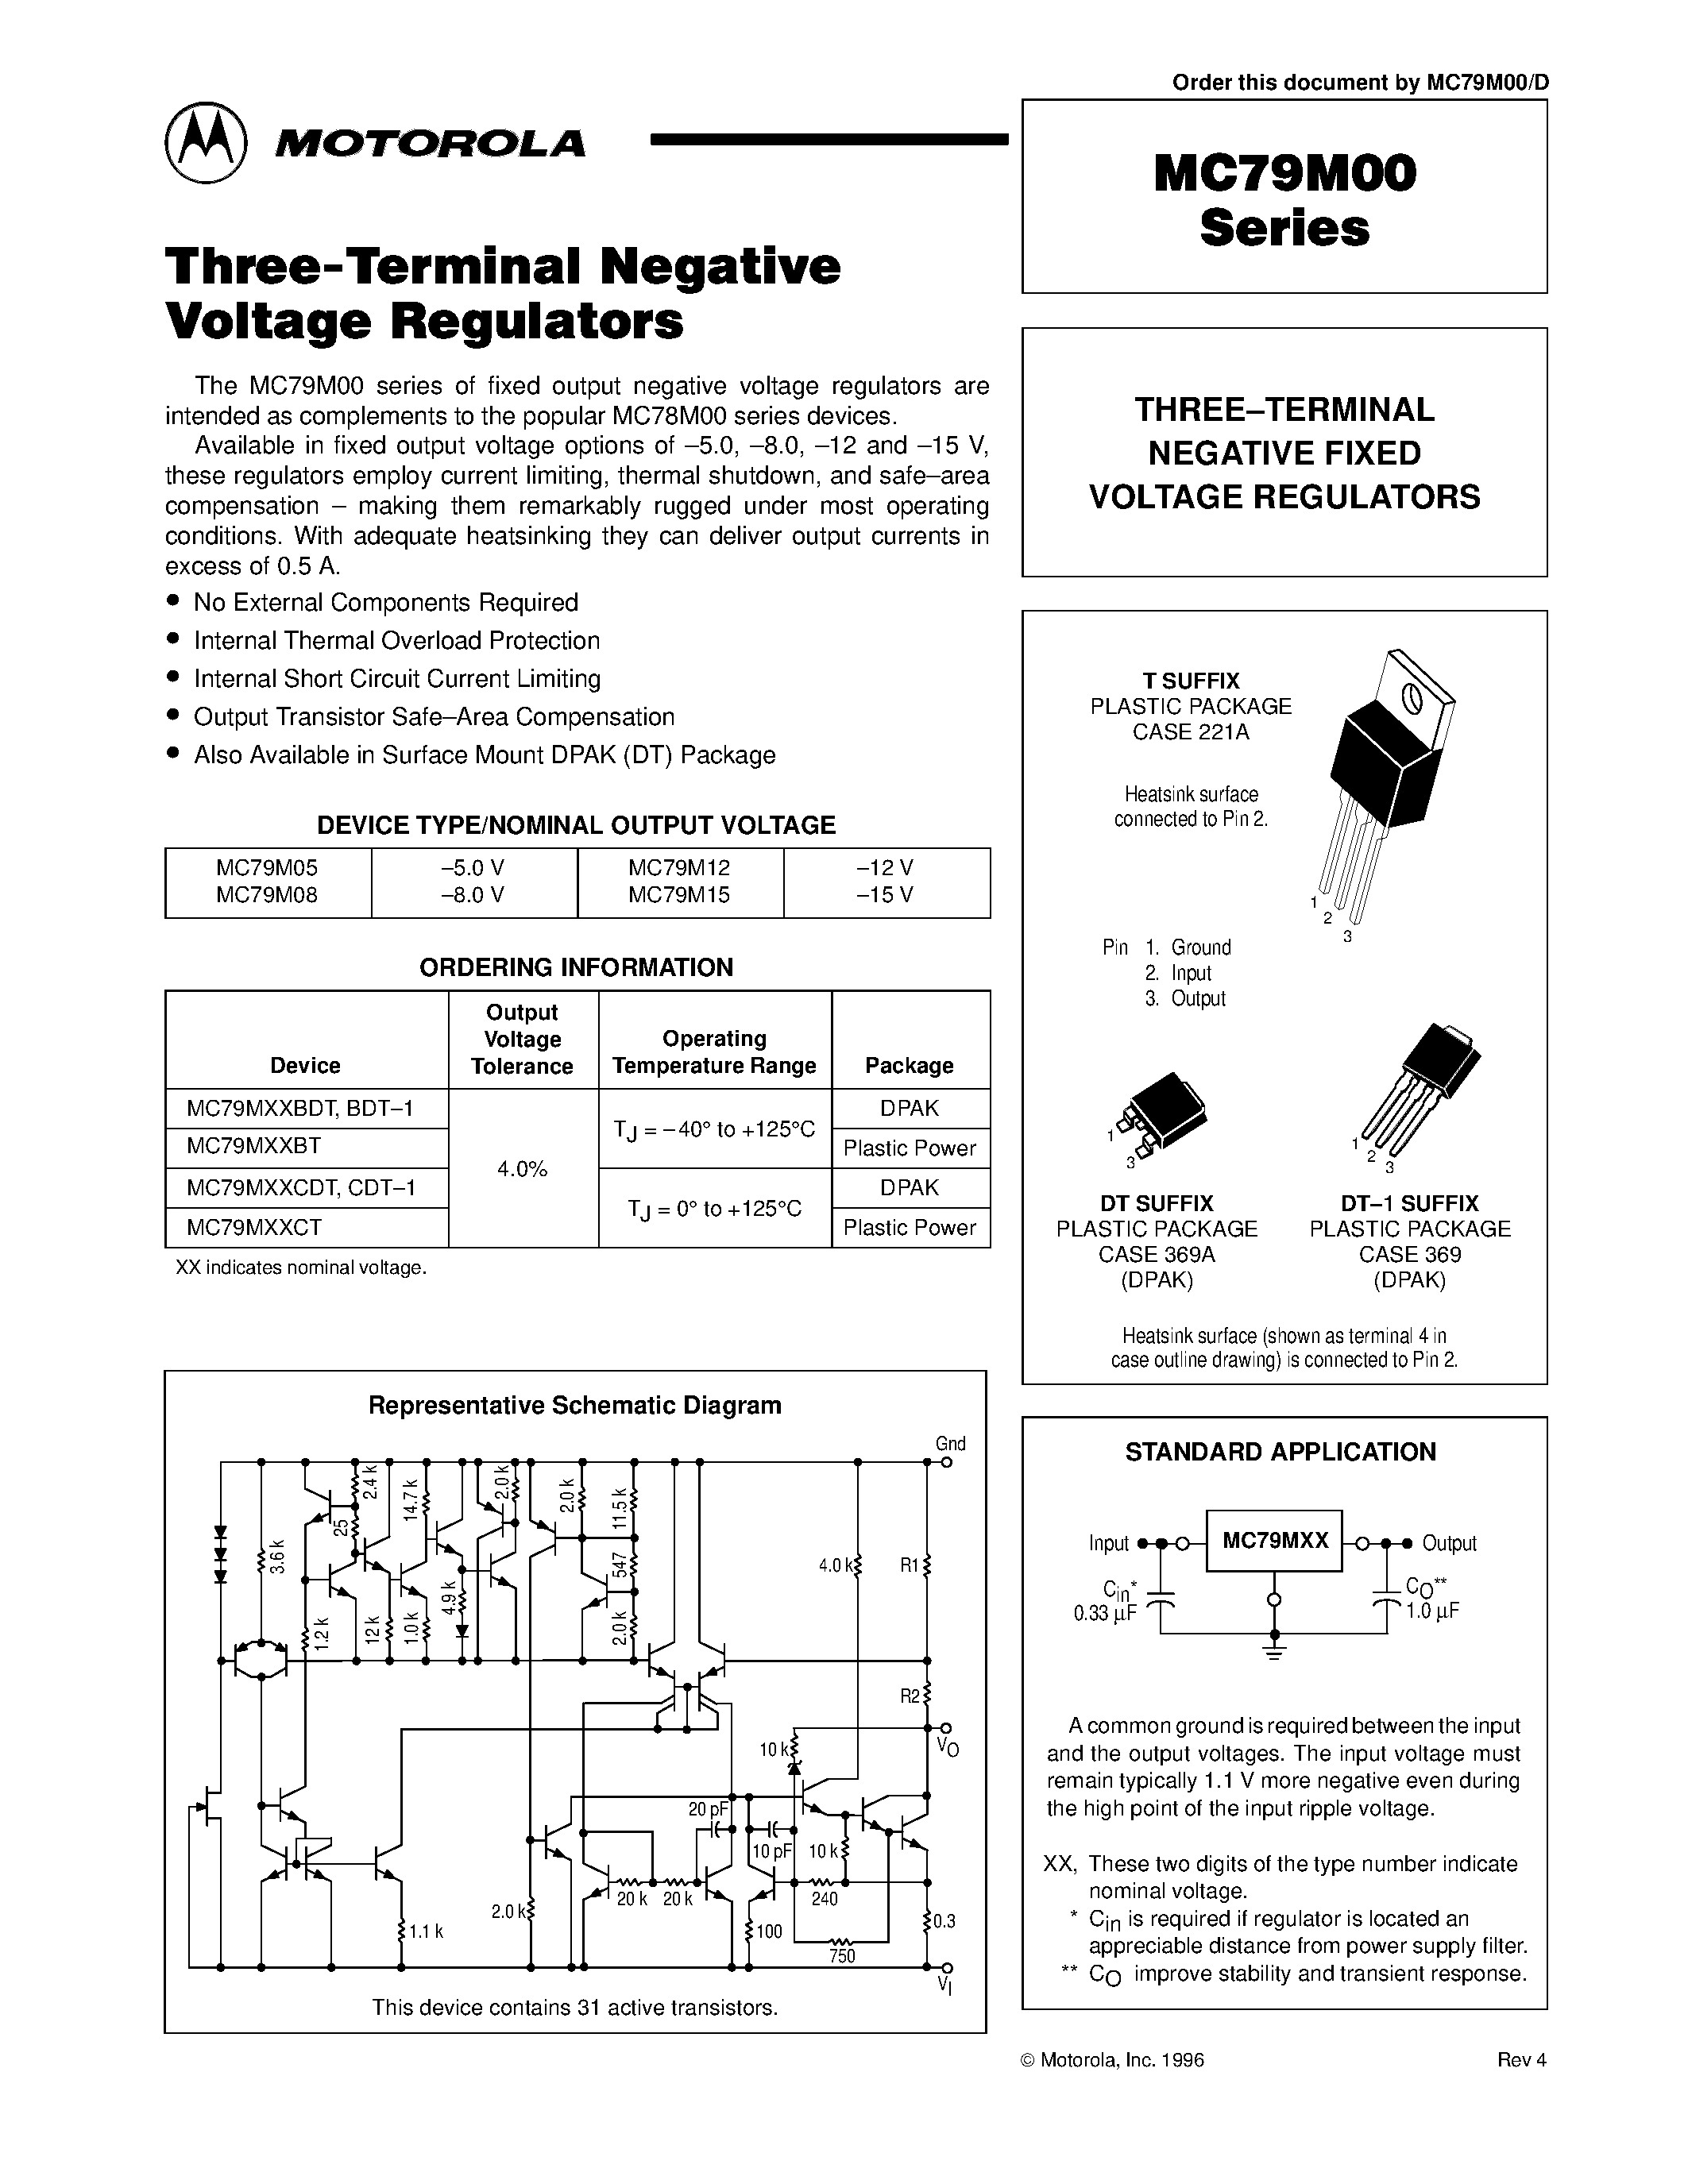 Datasheet MC79M08XBT - THREE-TERMINAL NEGATIVE FIXED VOLTAGE REGULATORS page 1